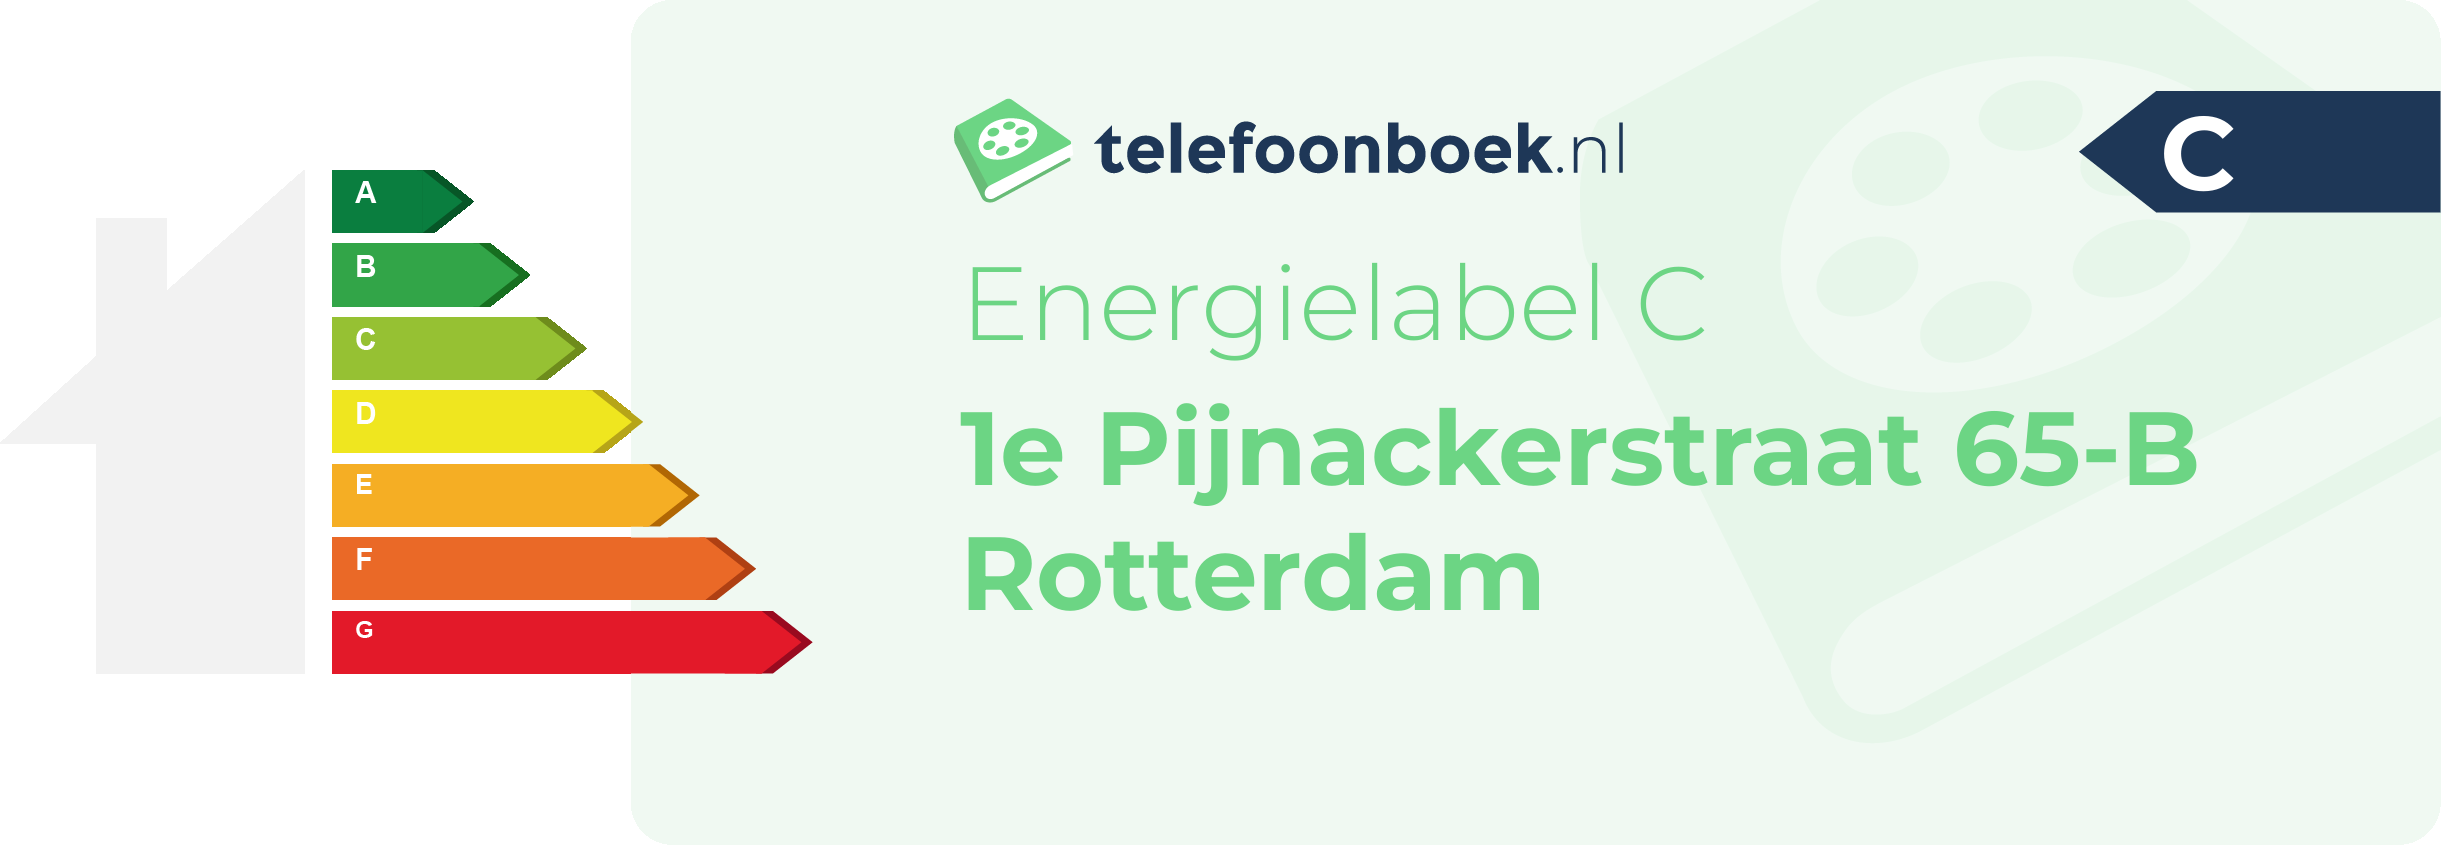 Energielabel 1e Pijnackerstraat 65-B Rotterdam